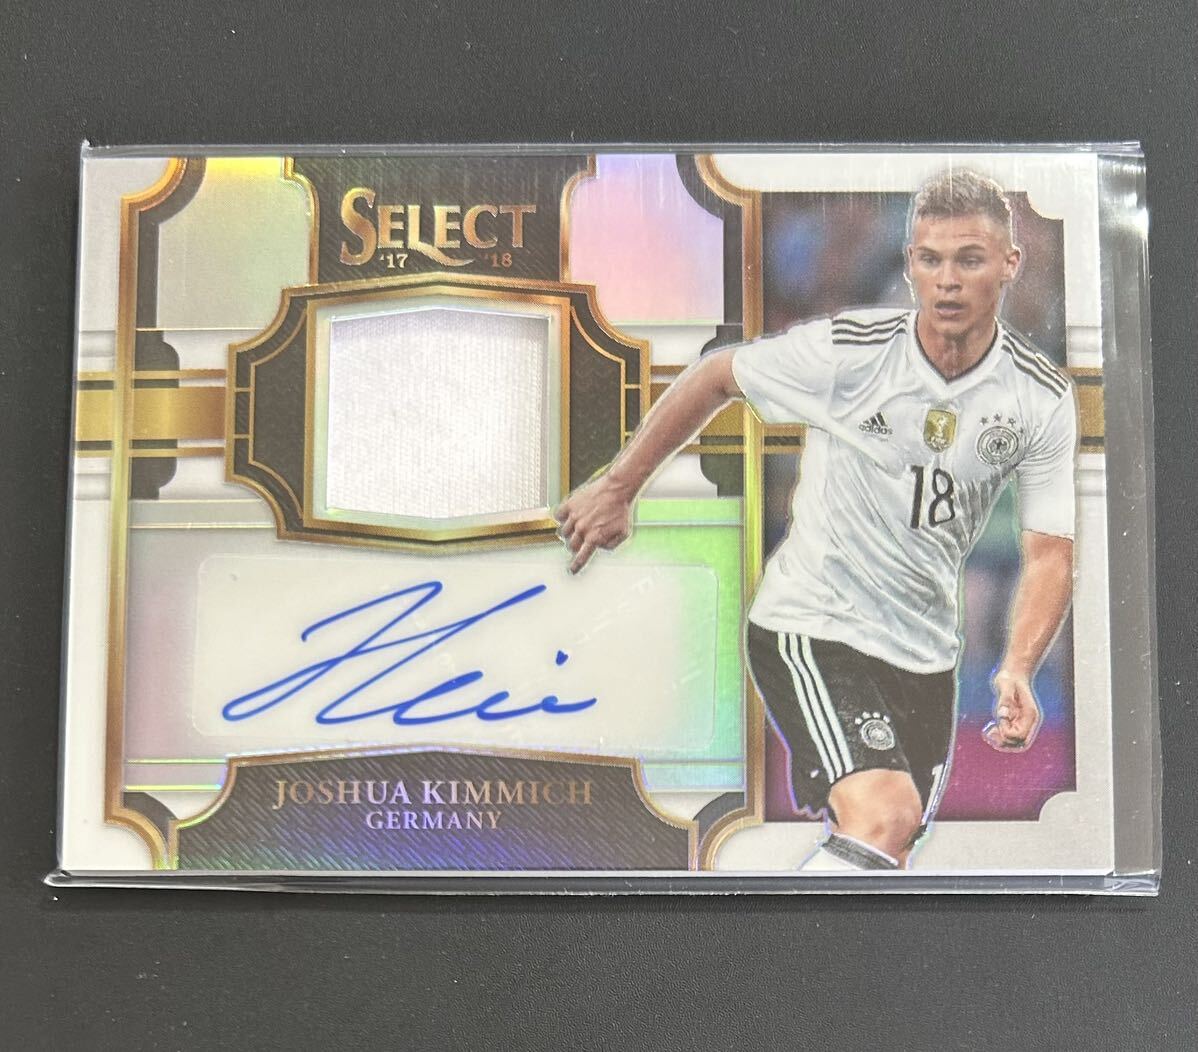 2017-18 Select Soccer Joshua Kimmich Germany Auto Jersey 99枚限定 Bayern Munchen_画像1